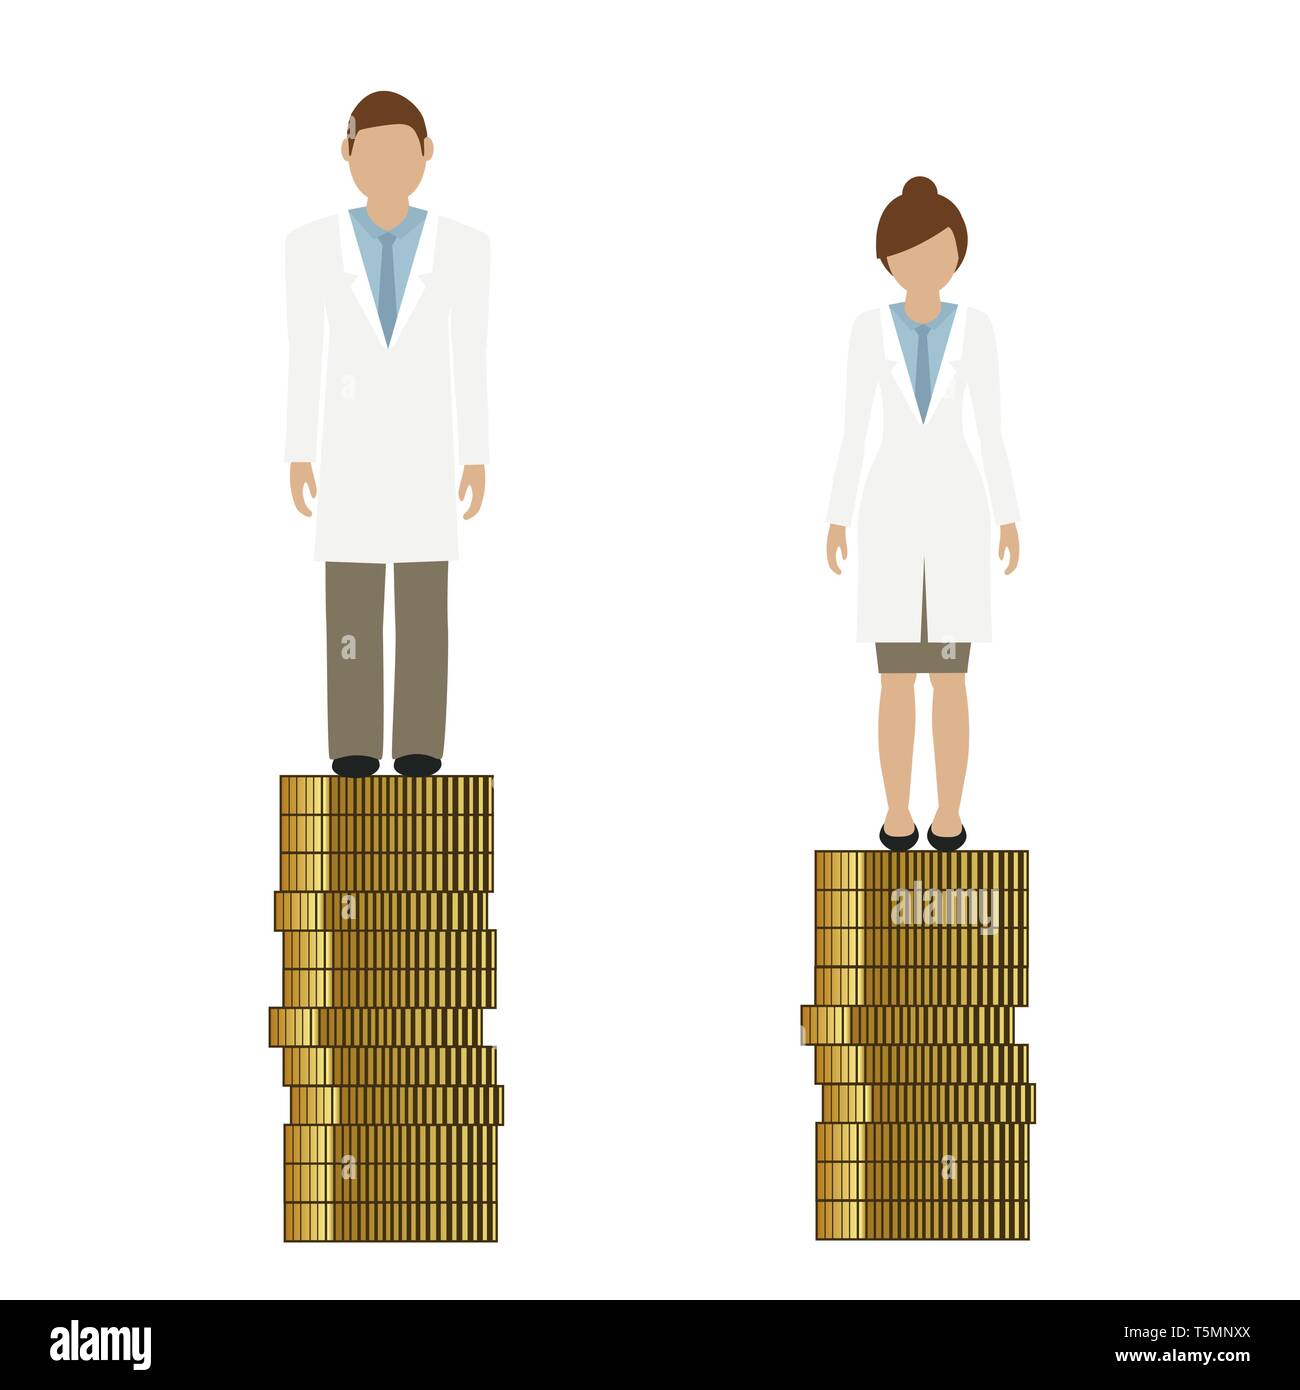 Frau verdient weniger Geld als Mann Arzt diskriminiert Vektor-illustration EPS 10. Stock Vektor